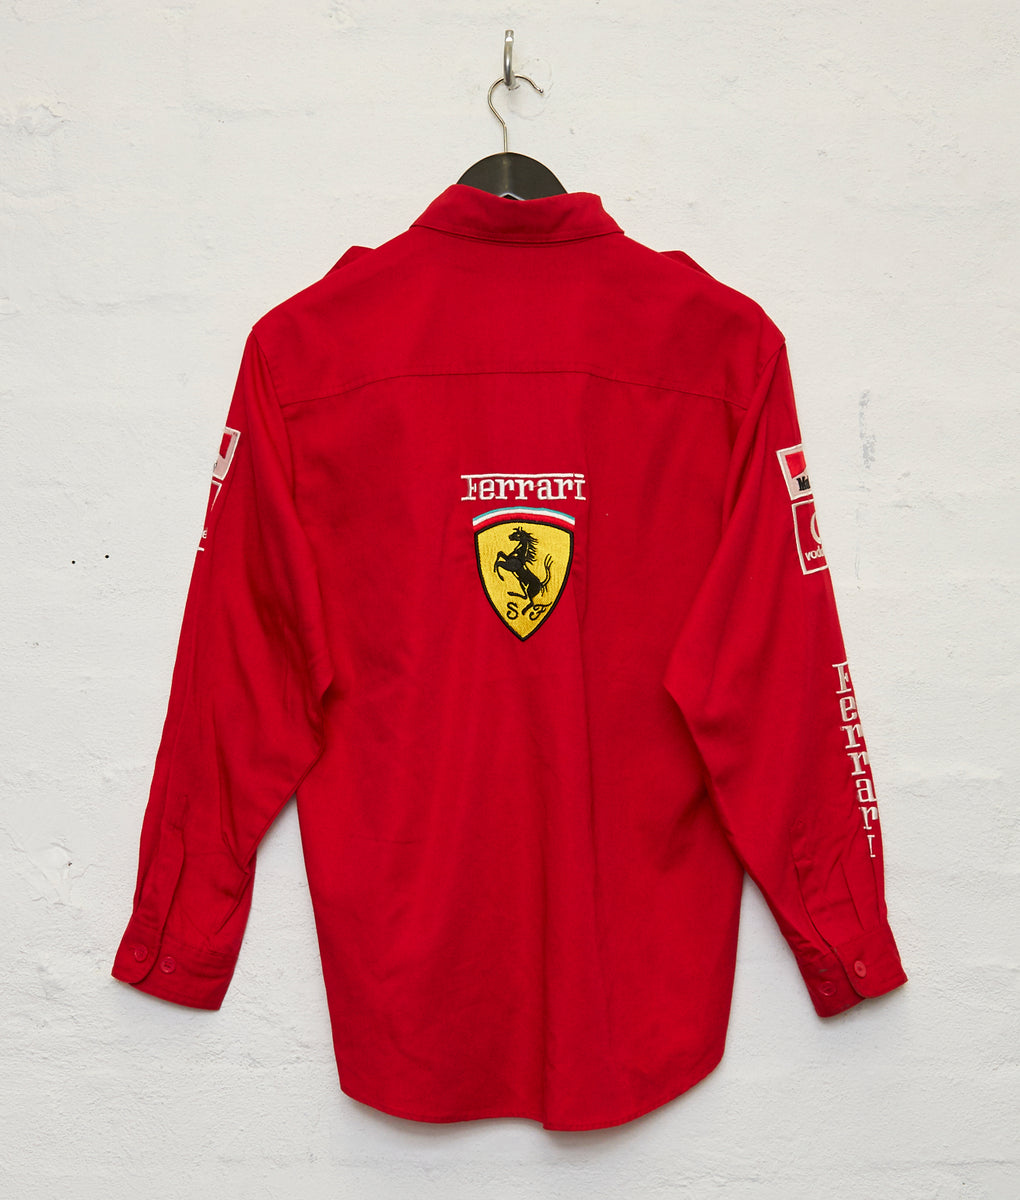 Ferrari Racing Shirt (M)